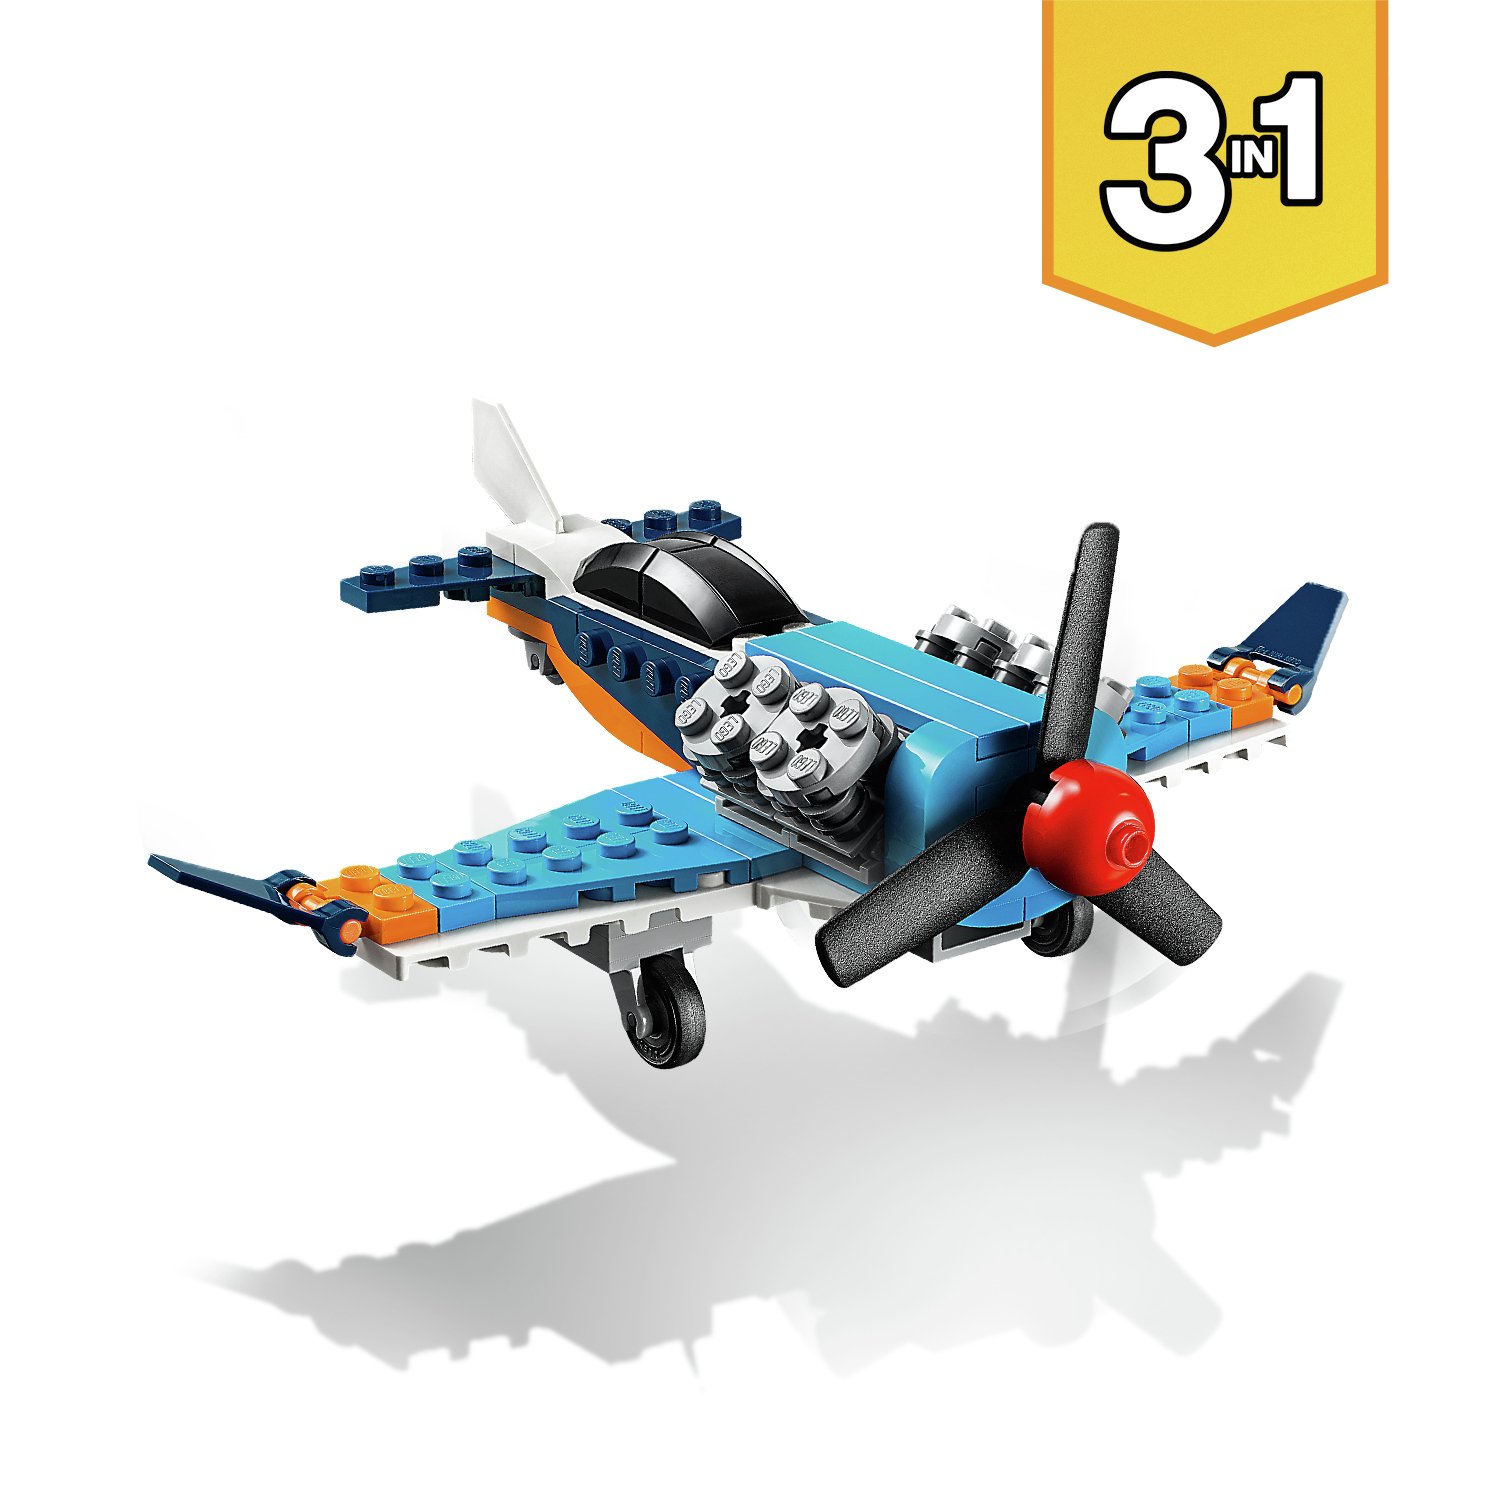 LEGO Creator 3-in-1 Propeller Plane Building Set Review